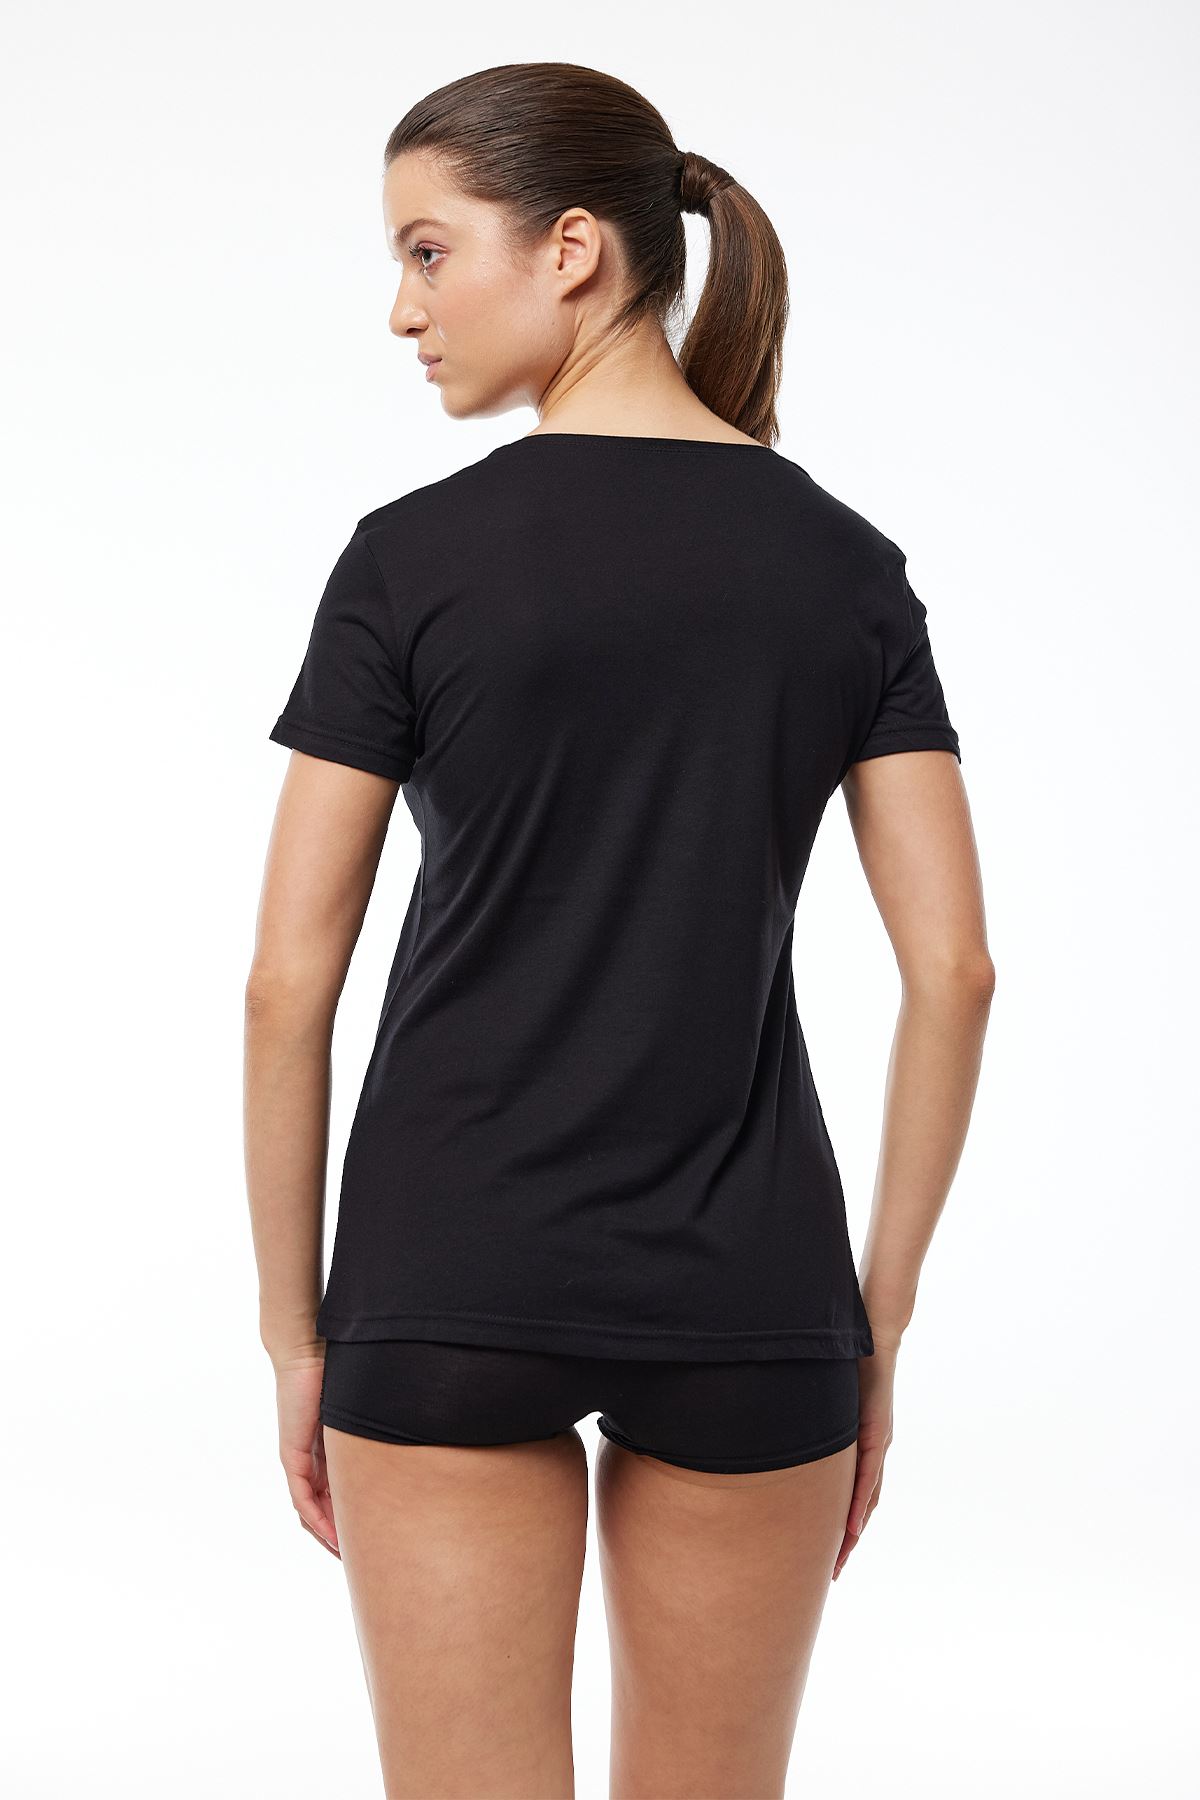 Kadın Siyah V Yaka İnce Modal Yaz Serinliği Tshirt 7051